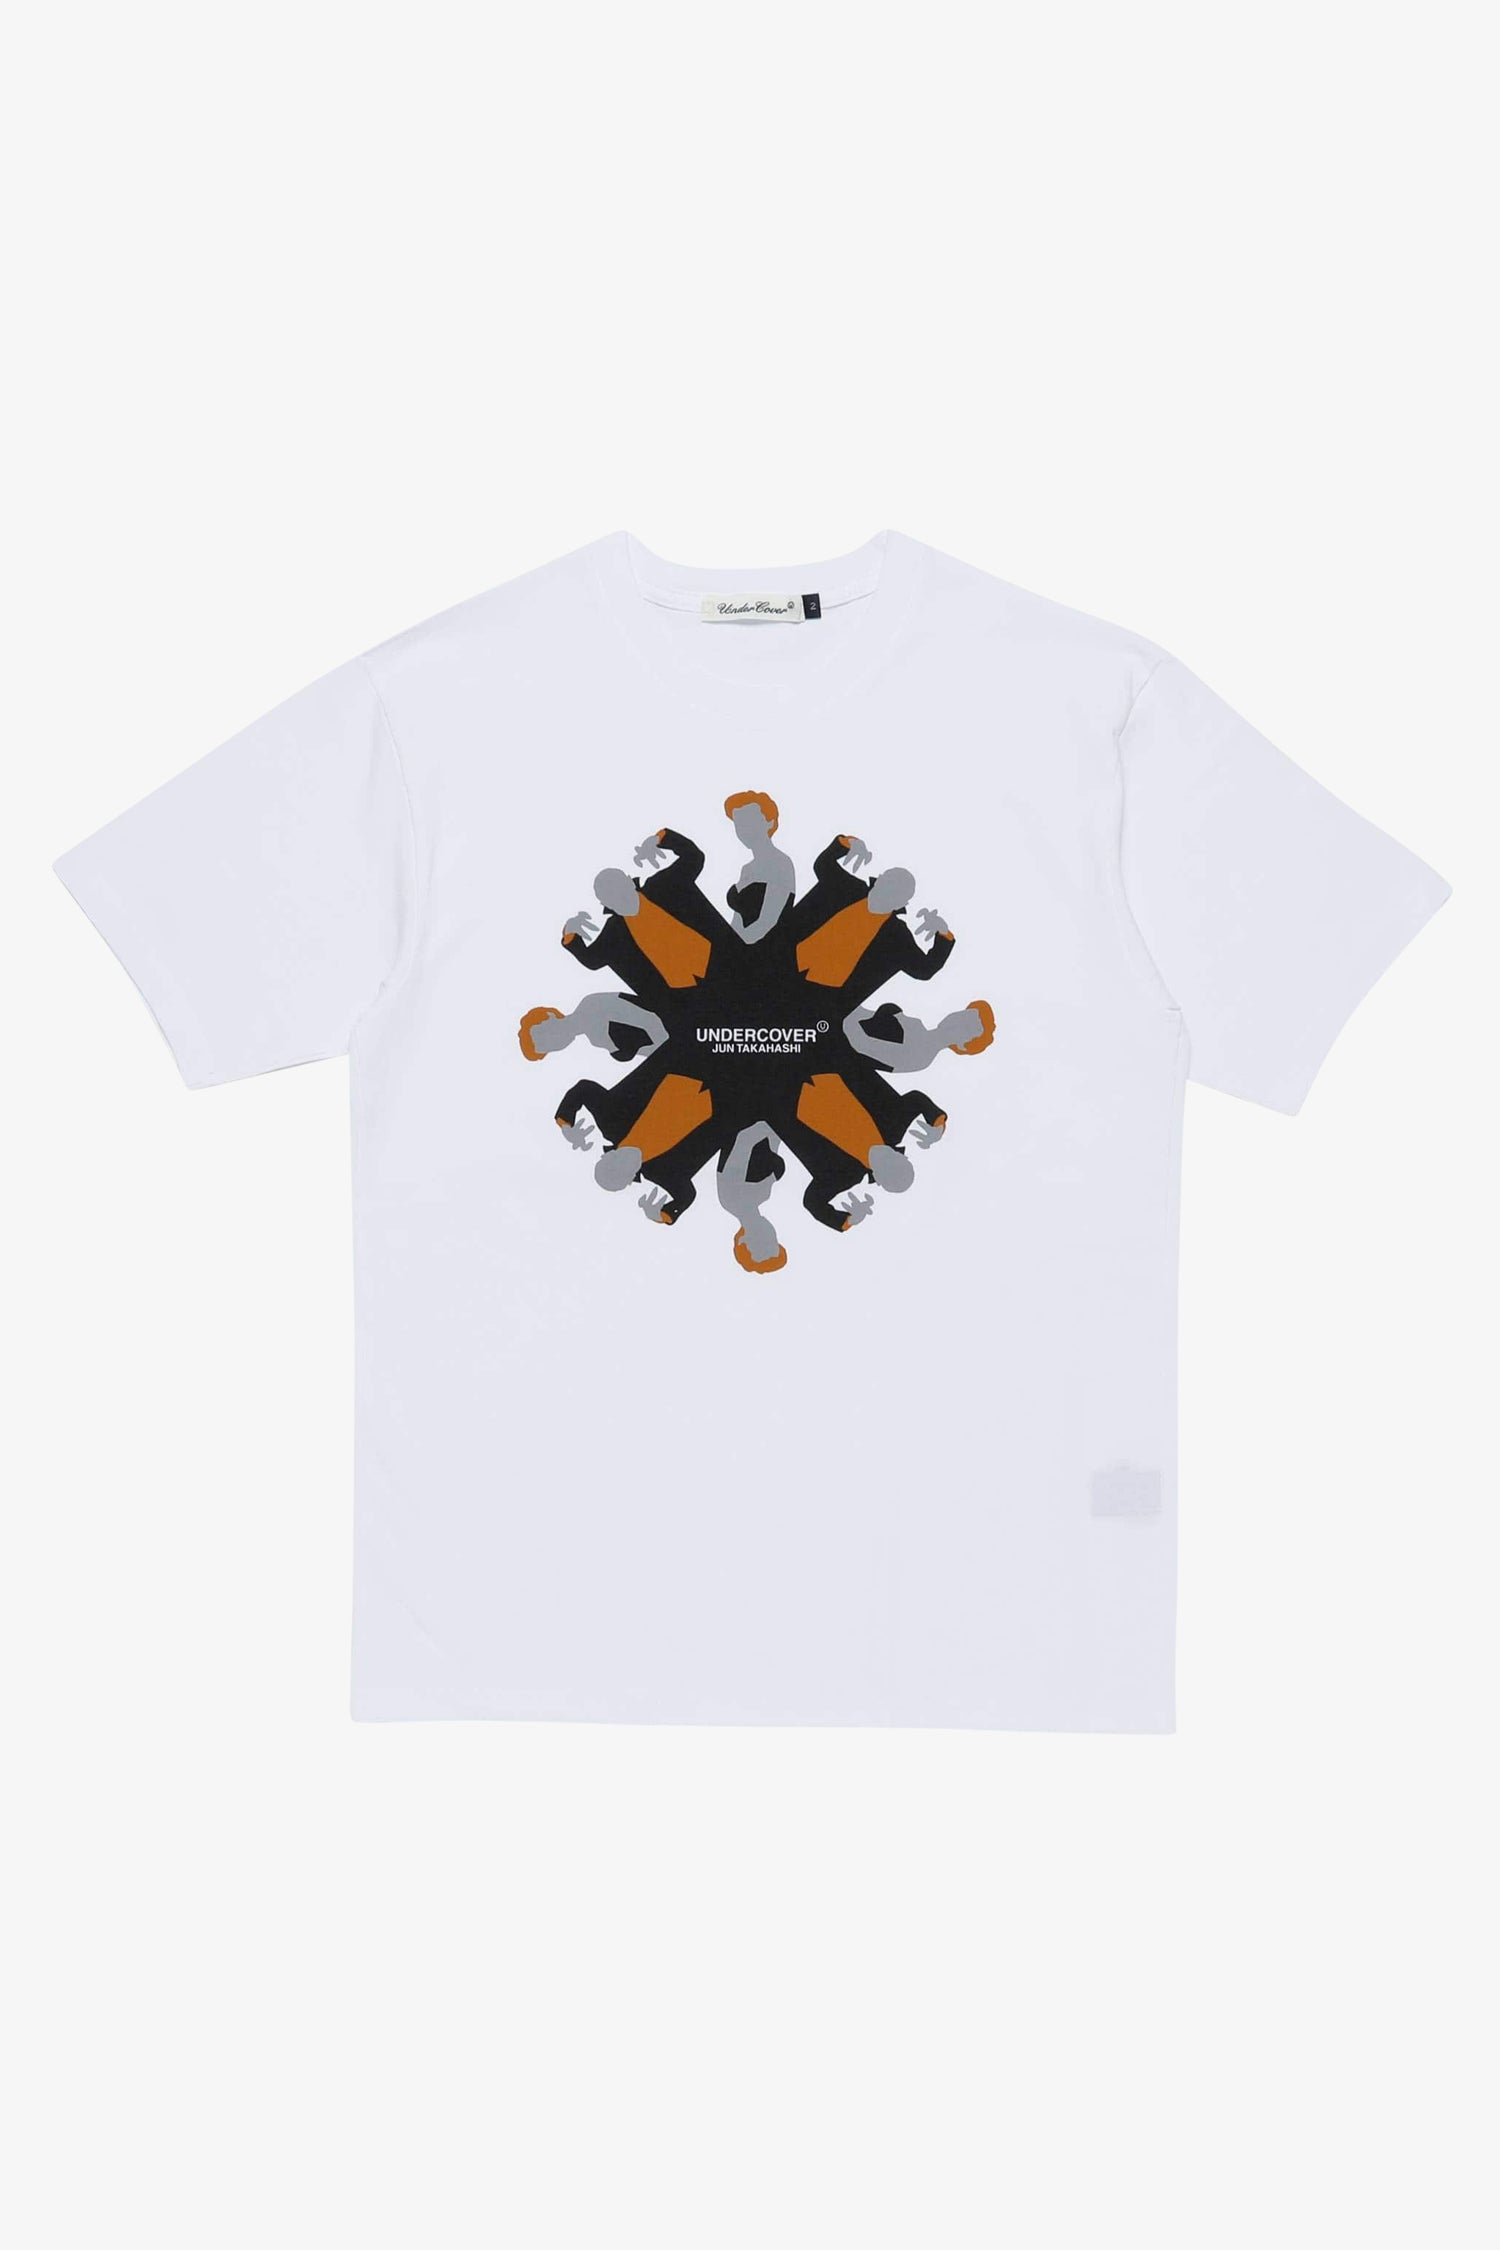 Selectshop FRAME - UNDERCOVER Nosferatu T-Shirt T-Shirt Dubai